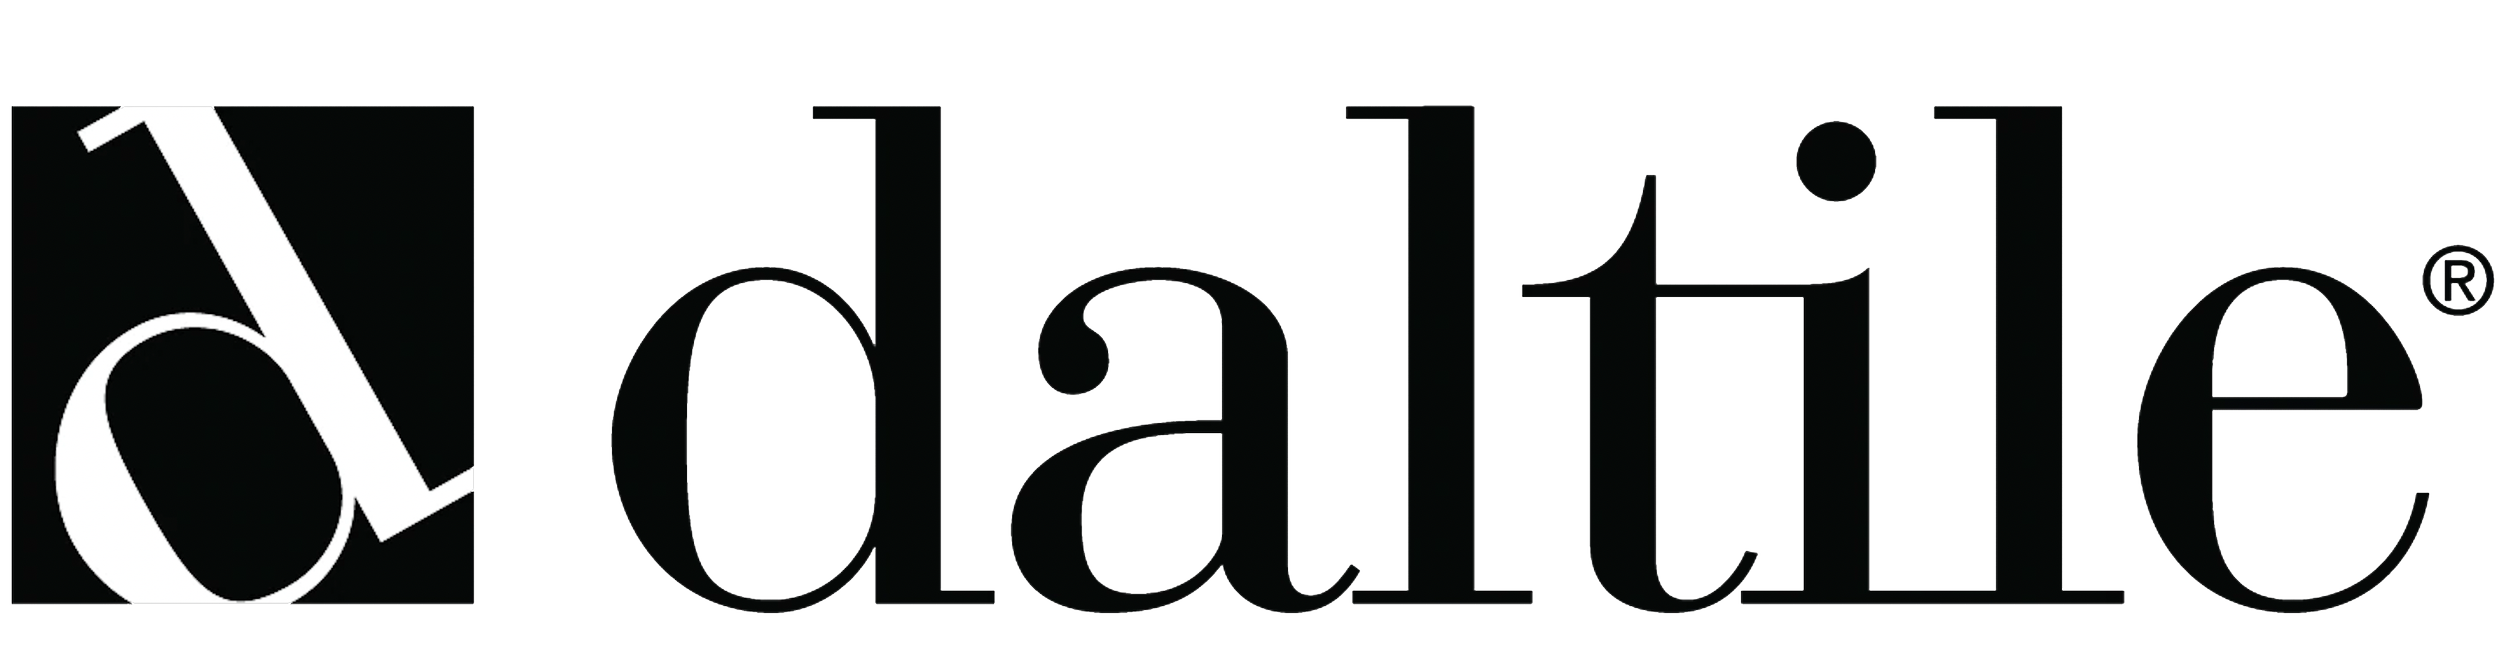 Daltile-logo.png